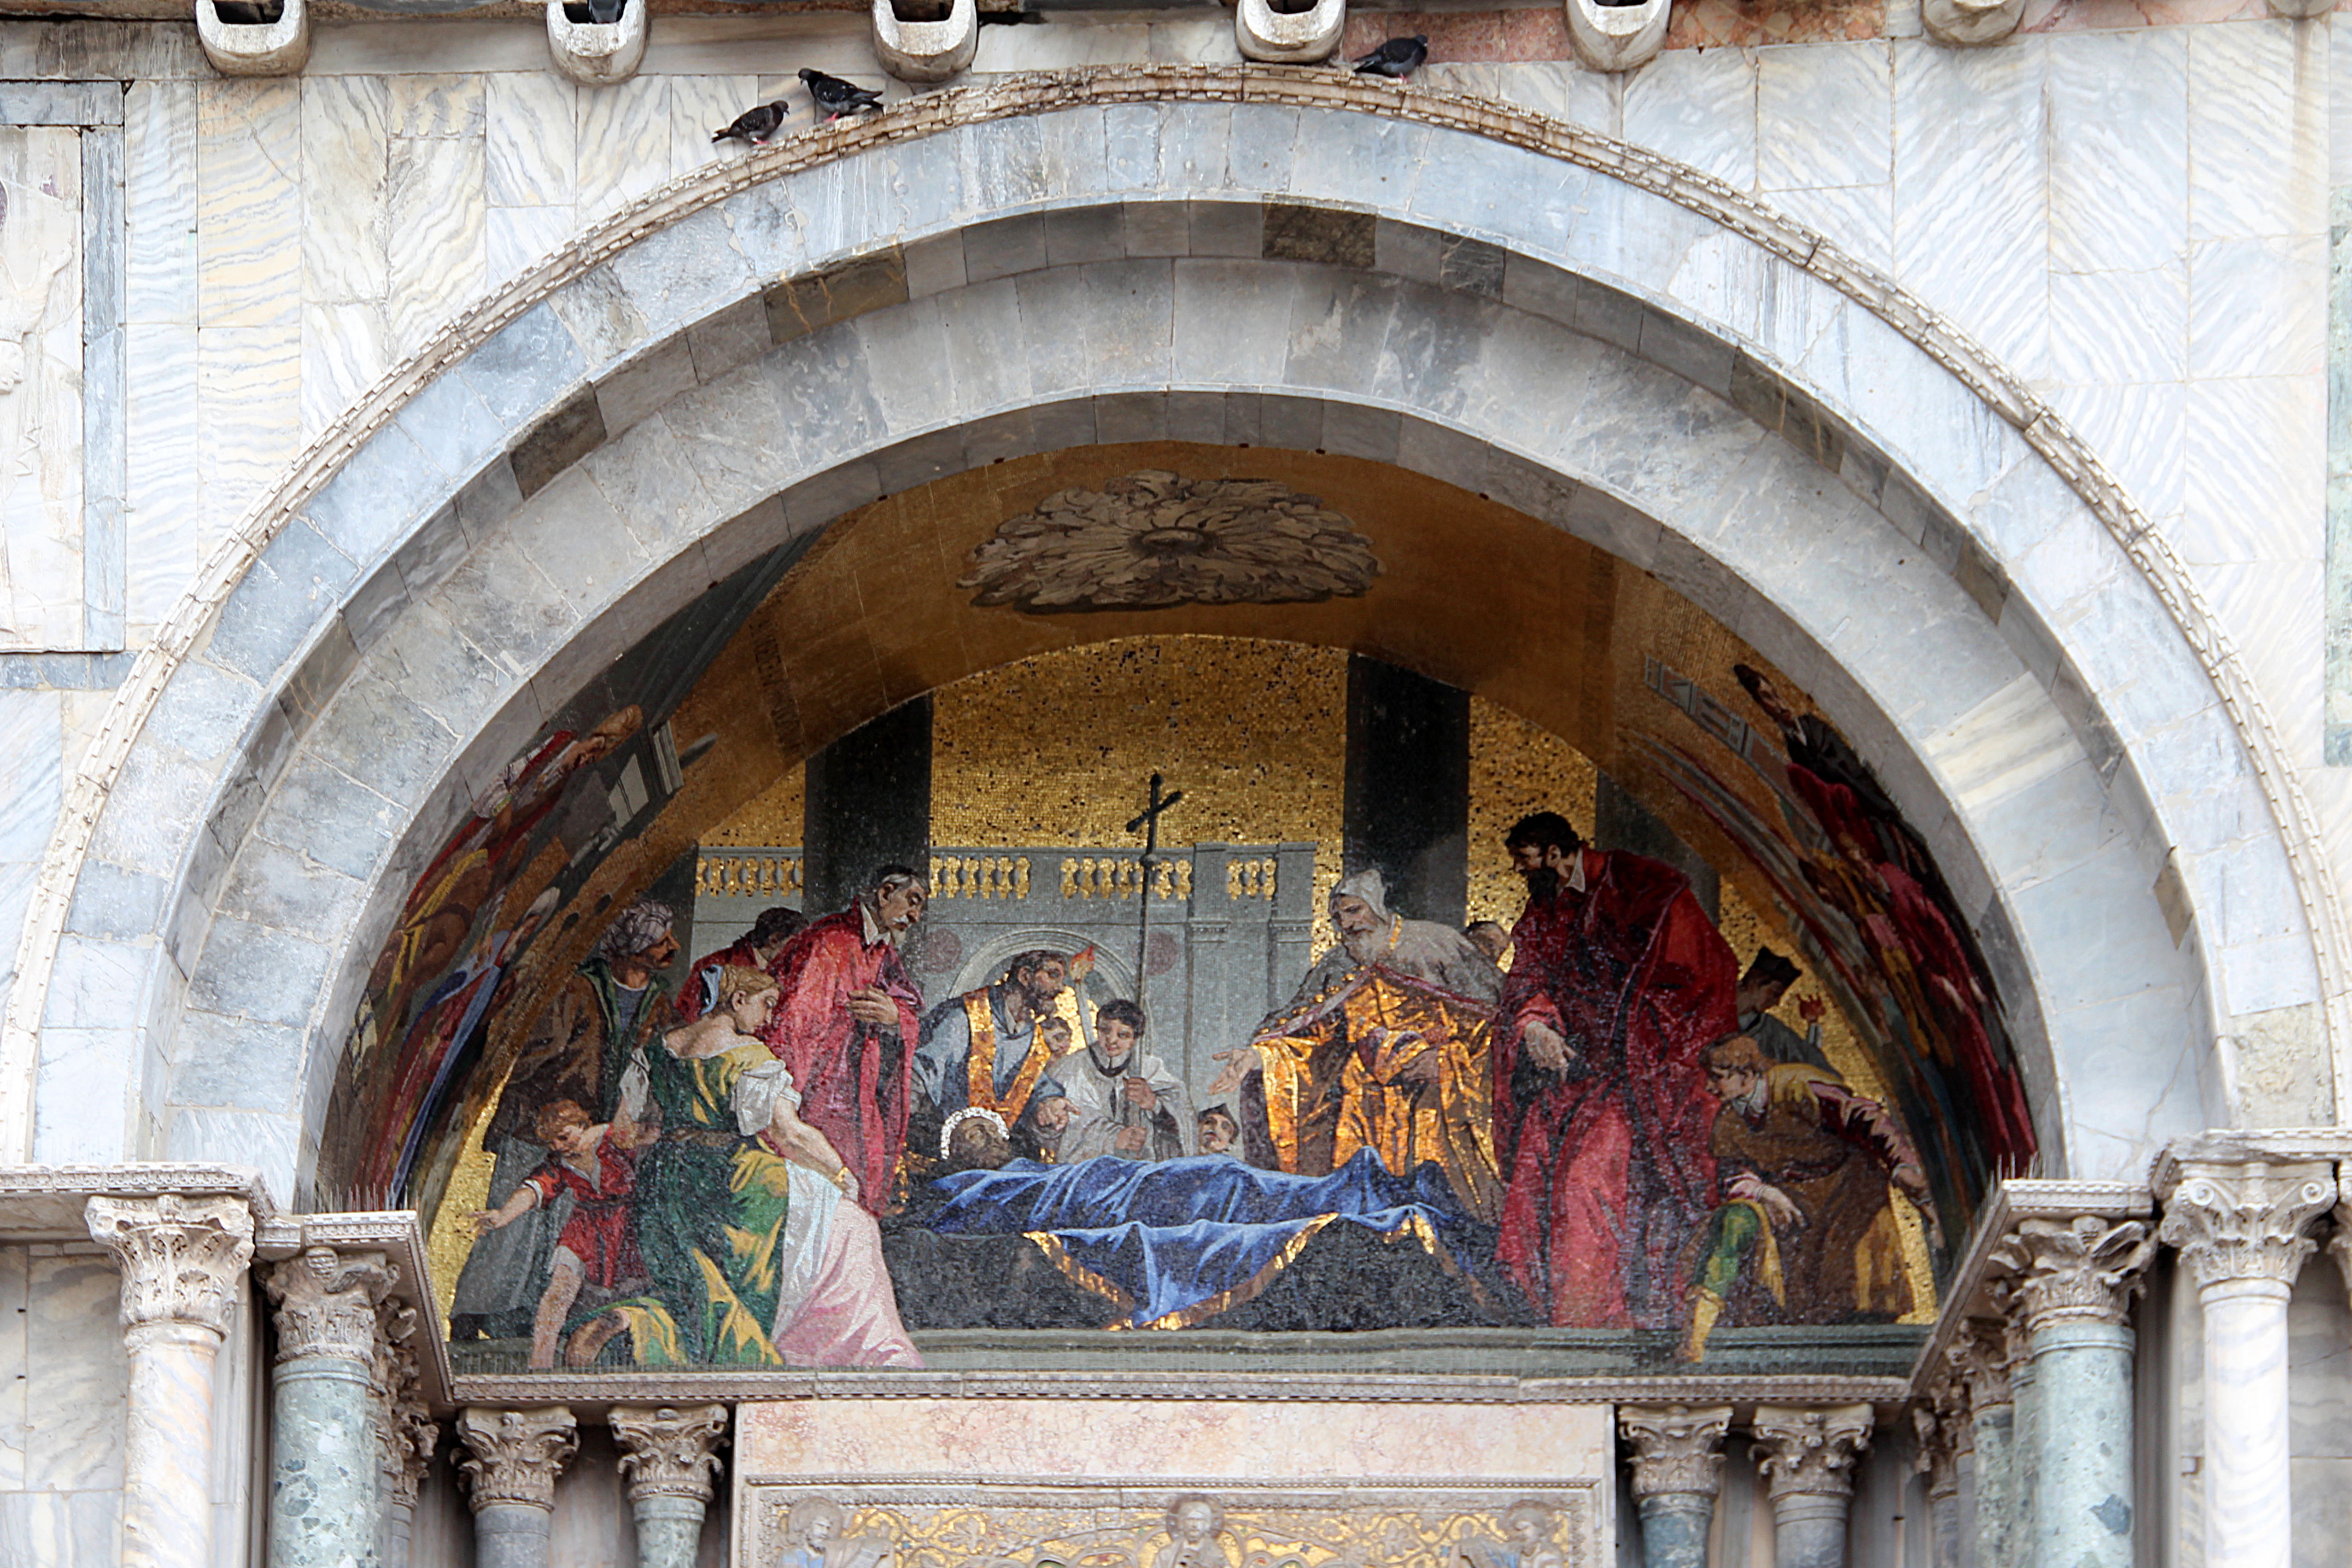 St marc. Albert Maignan the Central Portal of St. Mark of Venice.